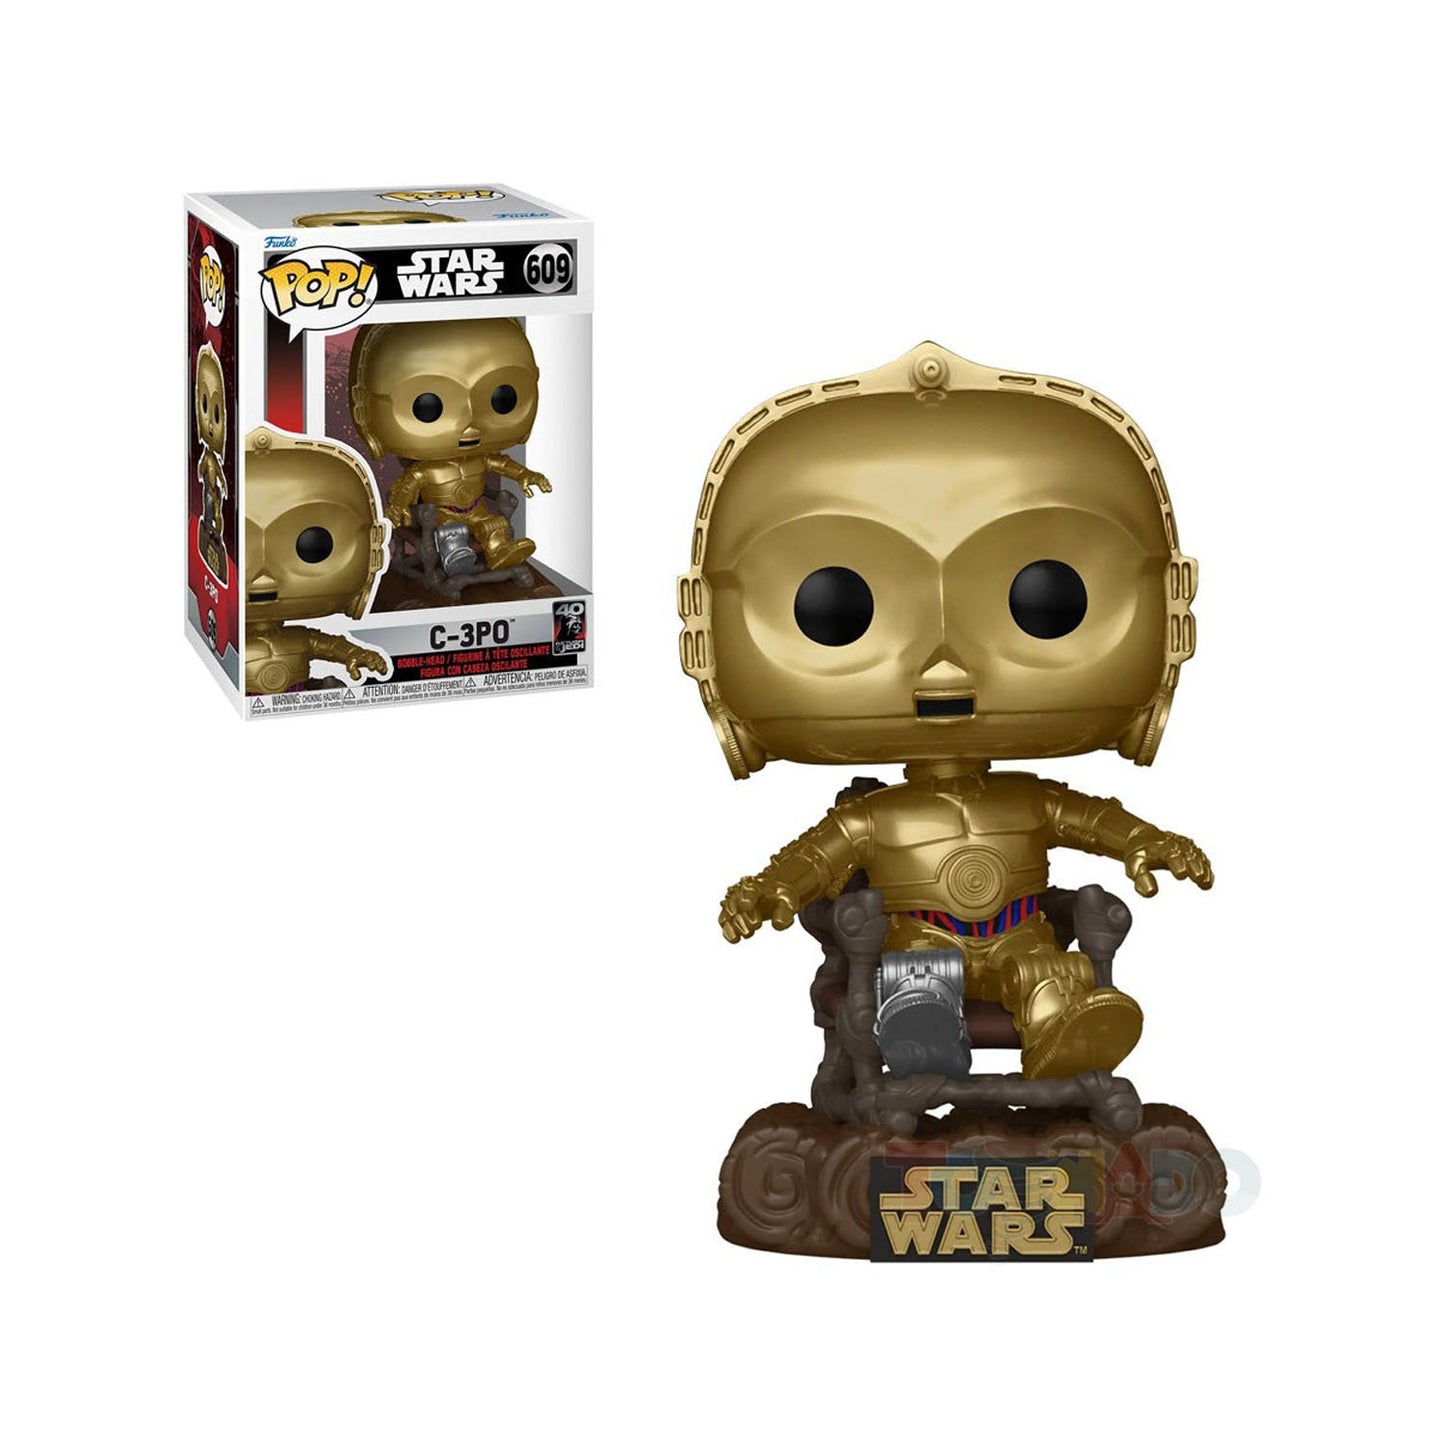 Funko Pop Star Wars Return Of The Jedi - C-3PO 609